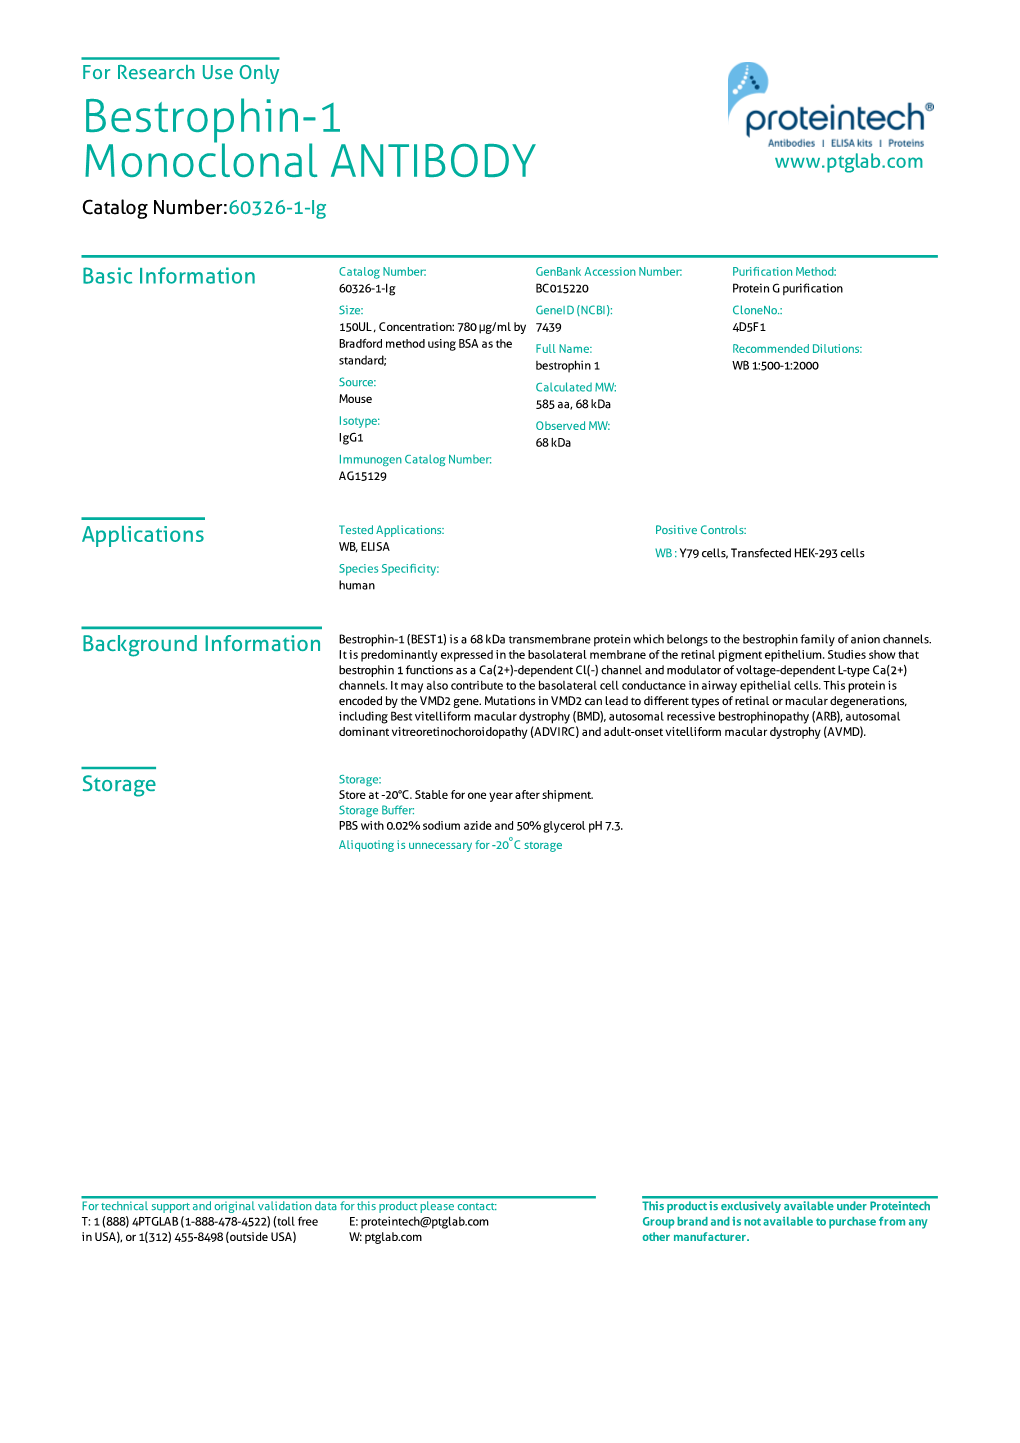 Bestrophin-1 Monoclonal ANTIBODY Catalog Number:60326-1-Ig